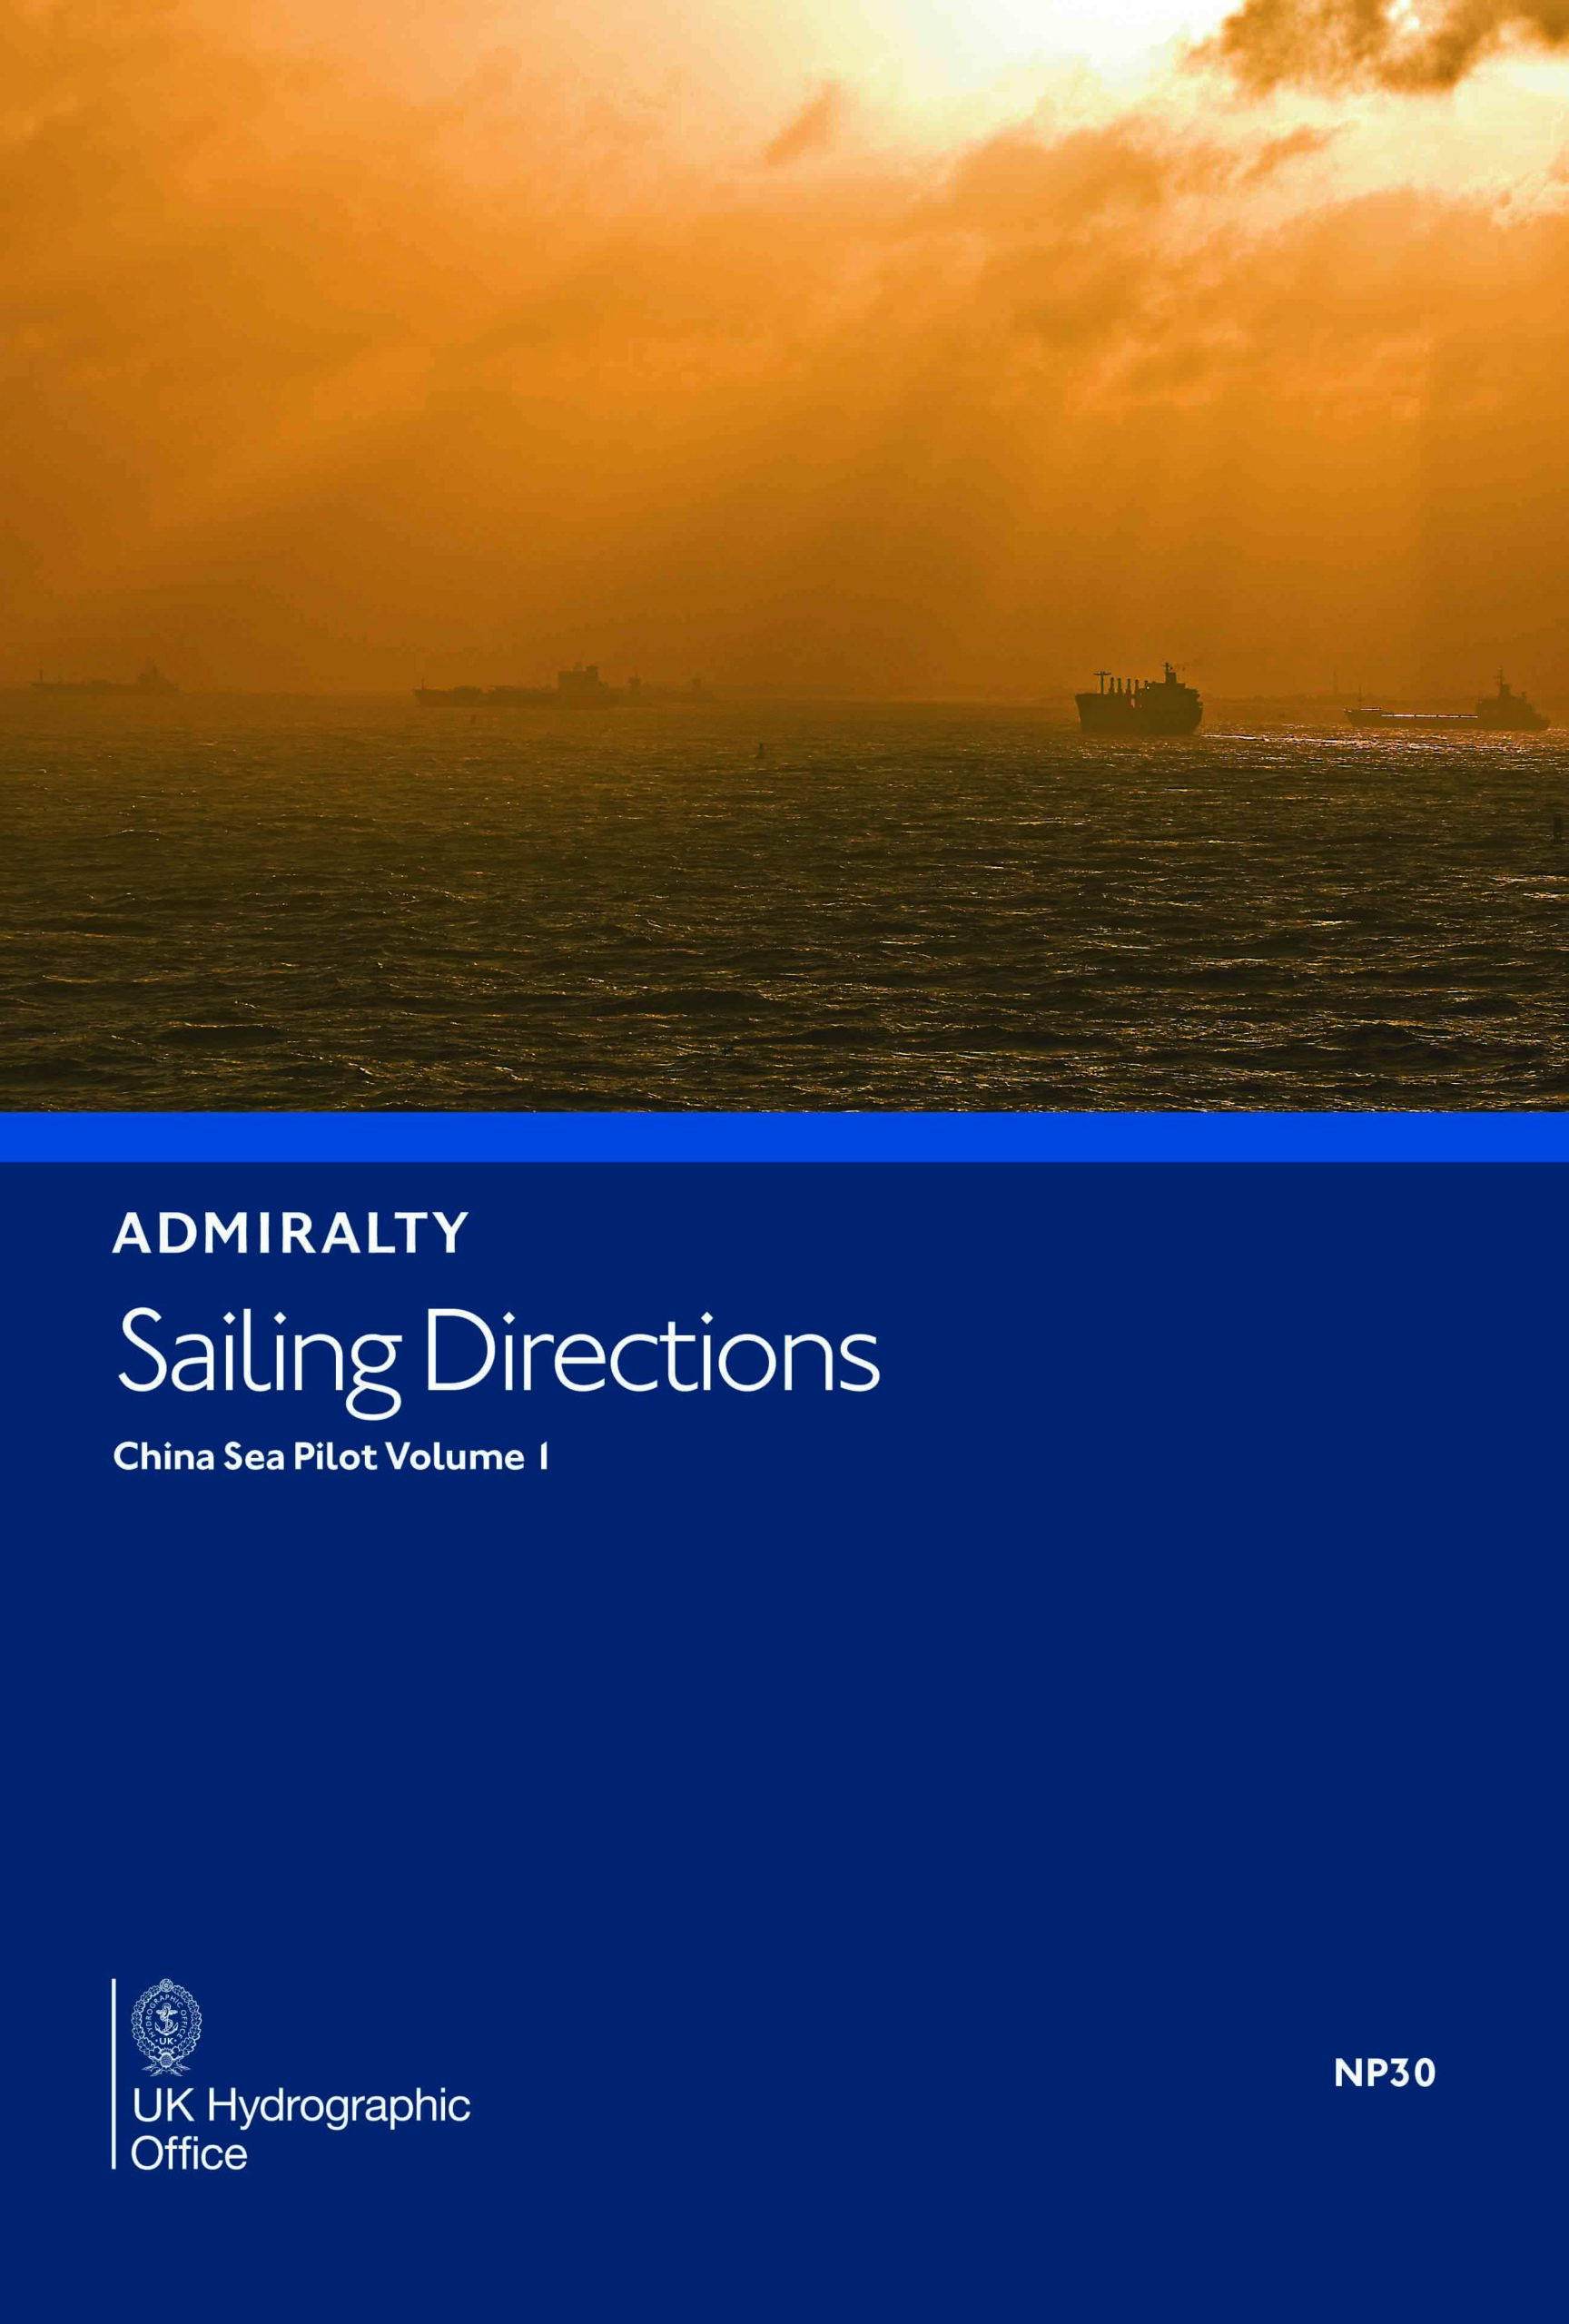 NP30 Admiralty Sailing Directions China Sea Pilot Volume 1